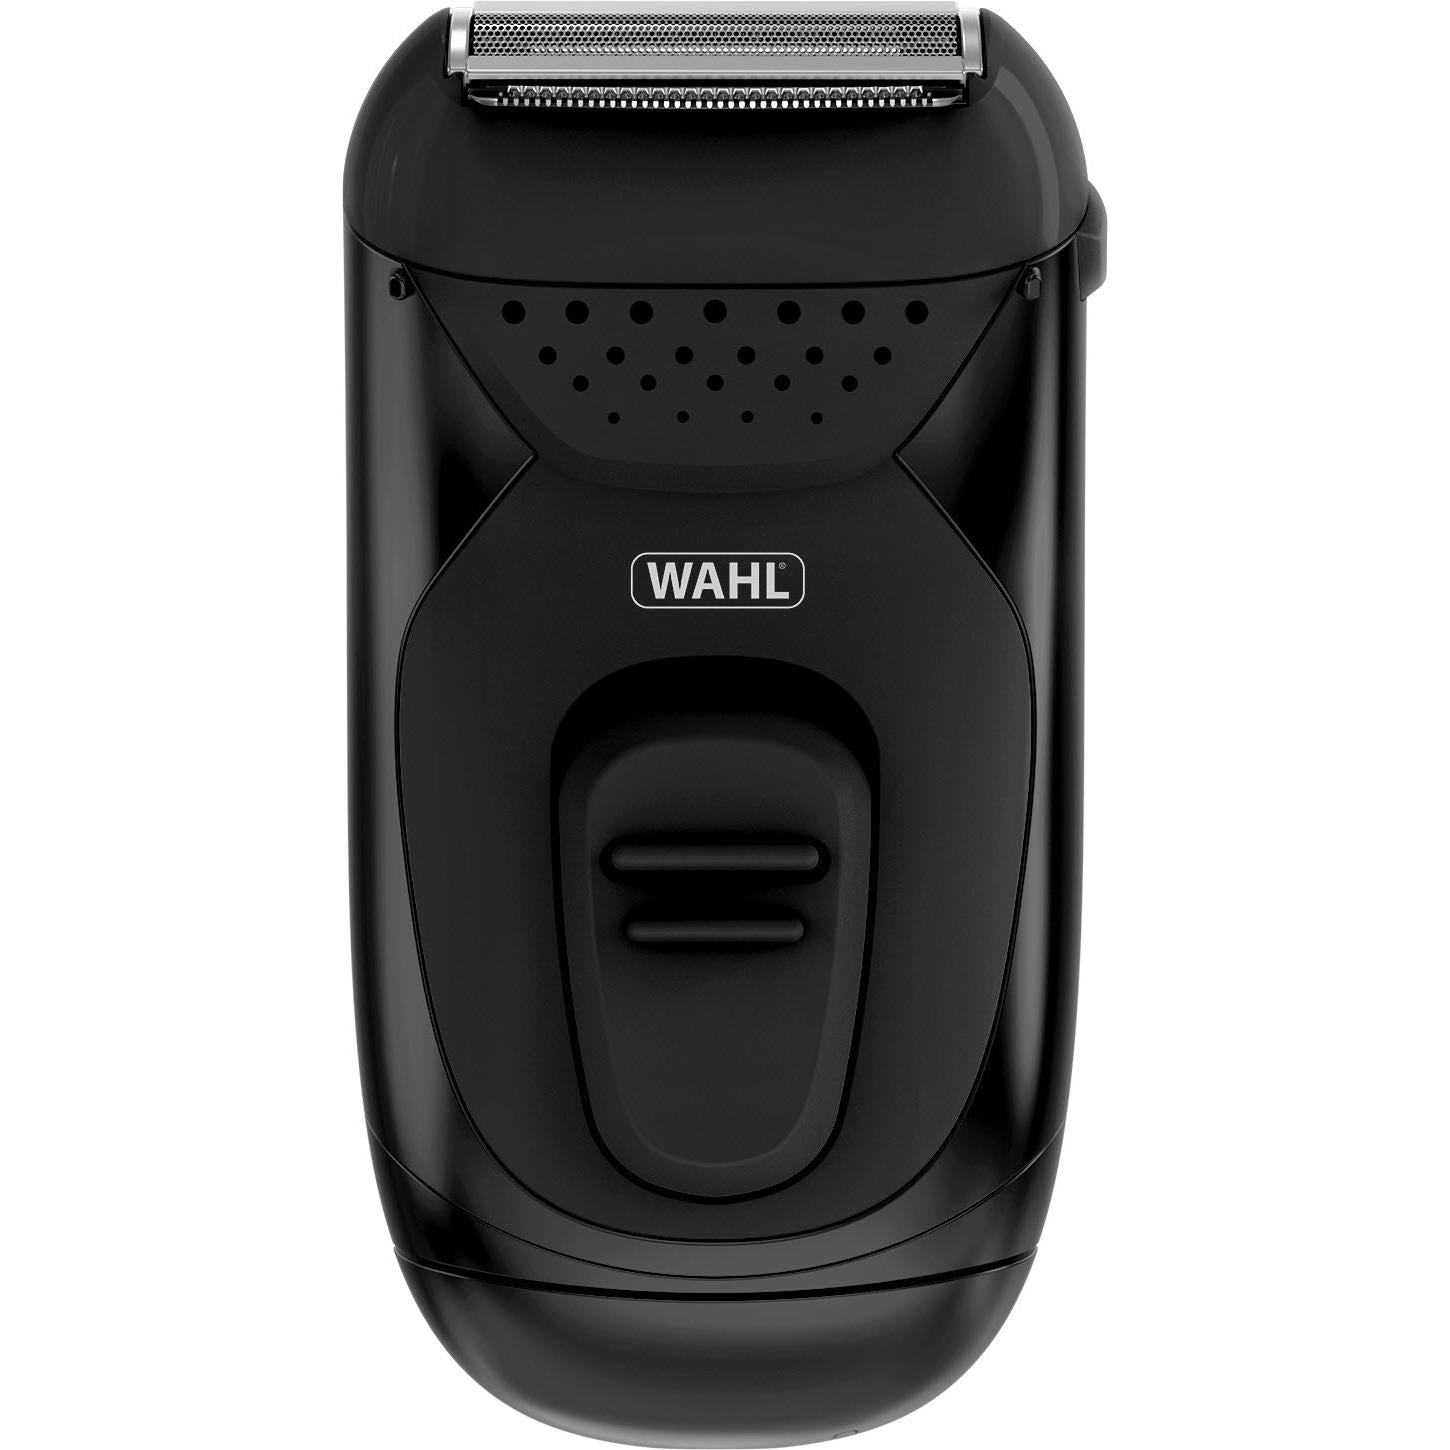 Wahl Waterproof Compact Shaver - JB Hi-Fi